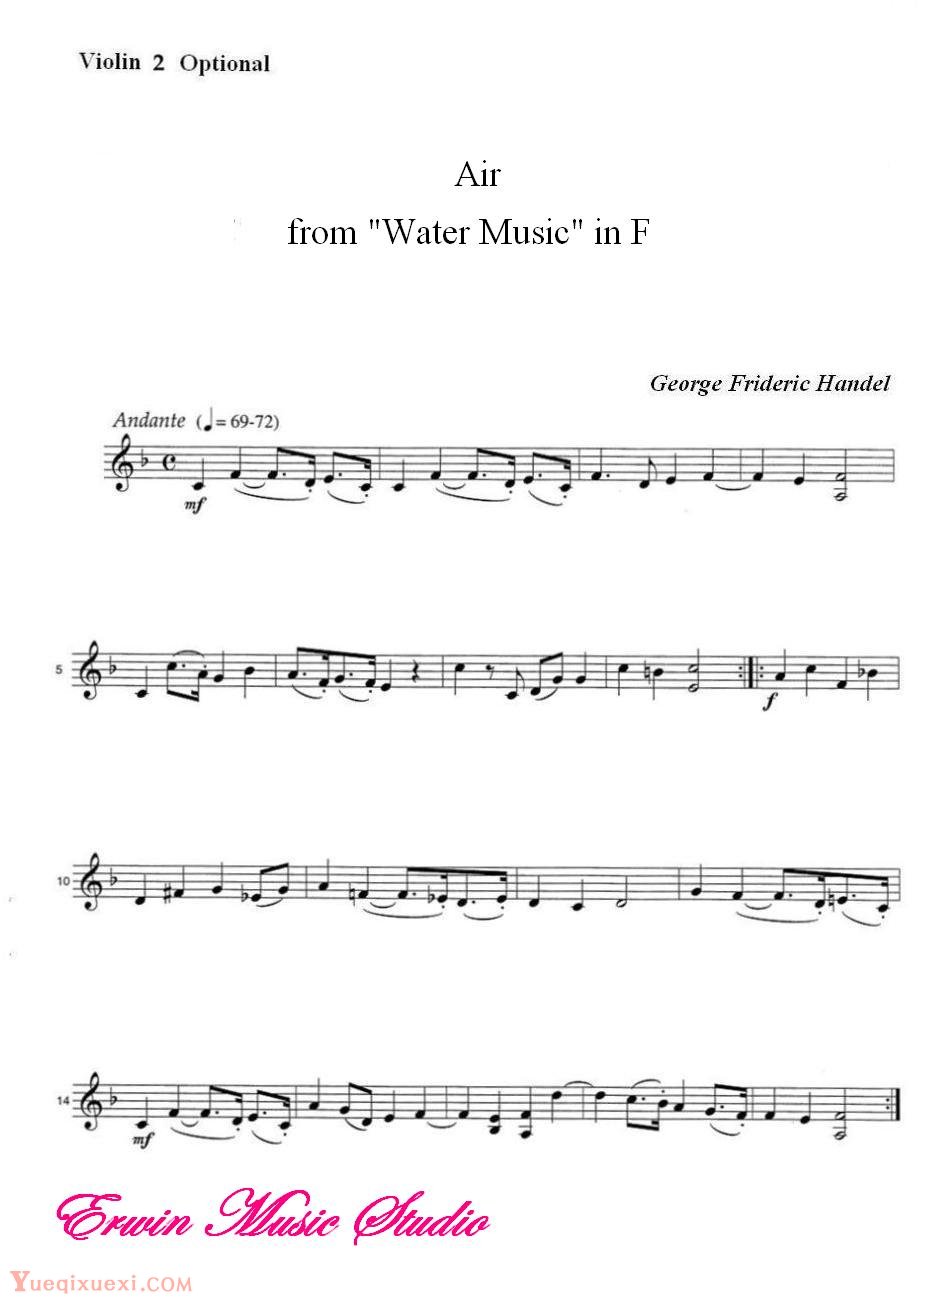 乔治 弗里德里克 亨德尔-音乐 选自F大调水上音乐弦乐三重奏Violin  George Frideric Handel,  Air from Water Music in F